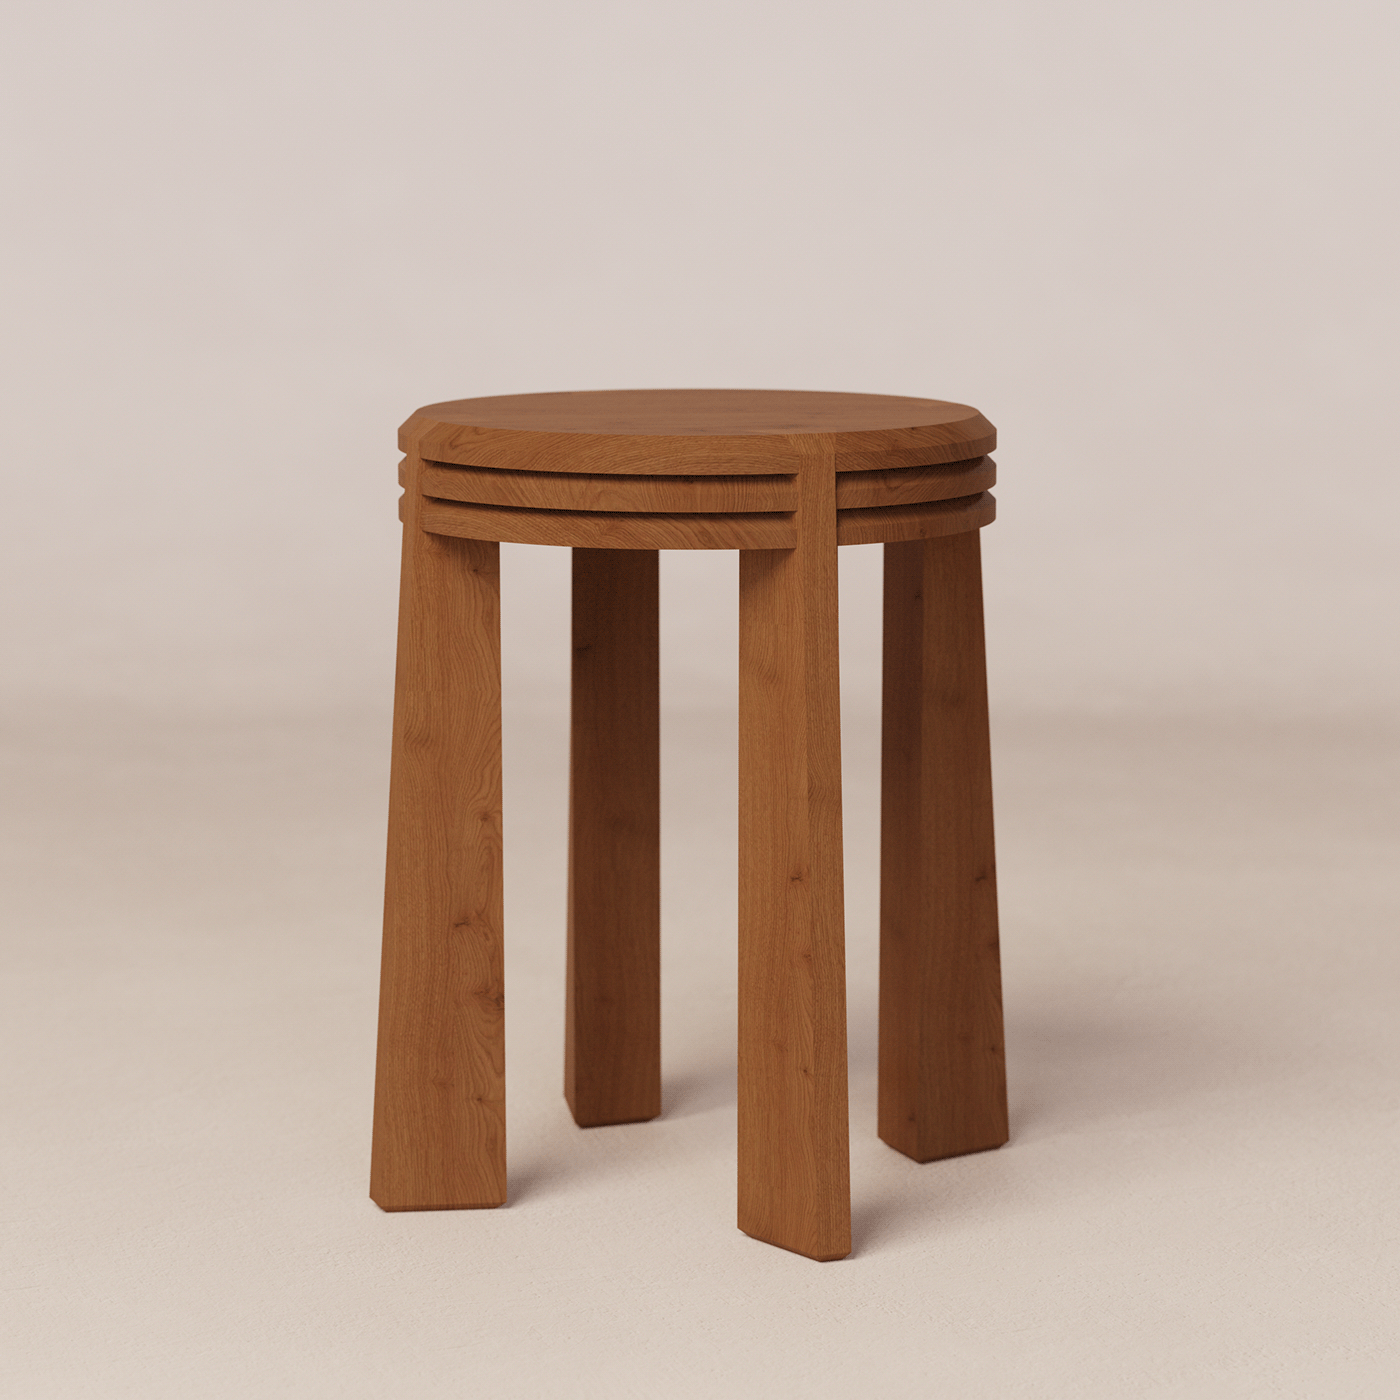 wooden seat furniture interior design  architecture Render design stool chair furniture design 